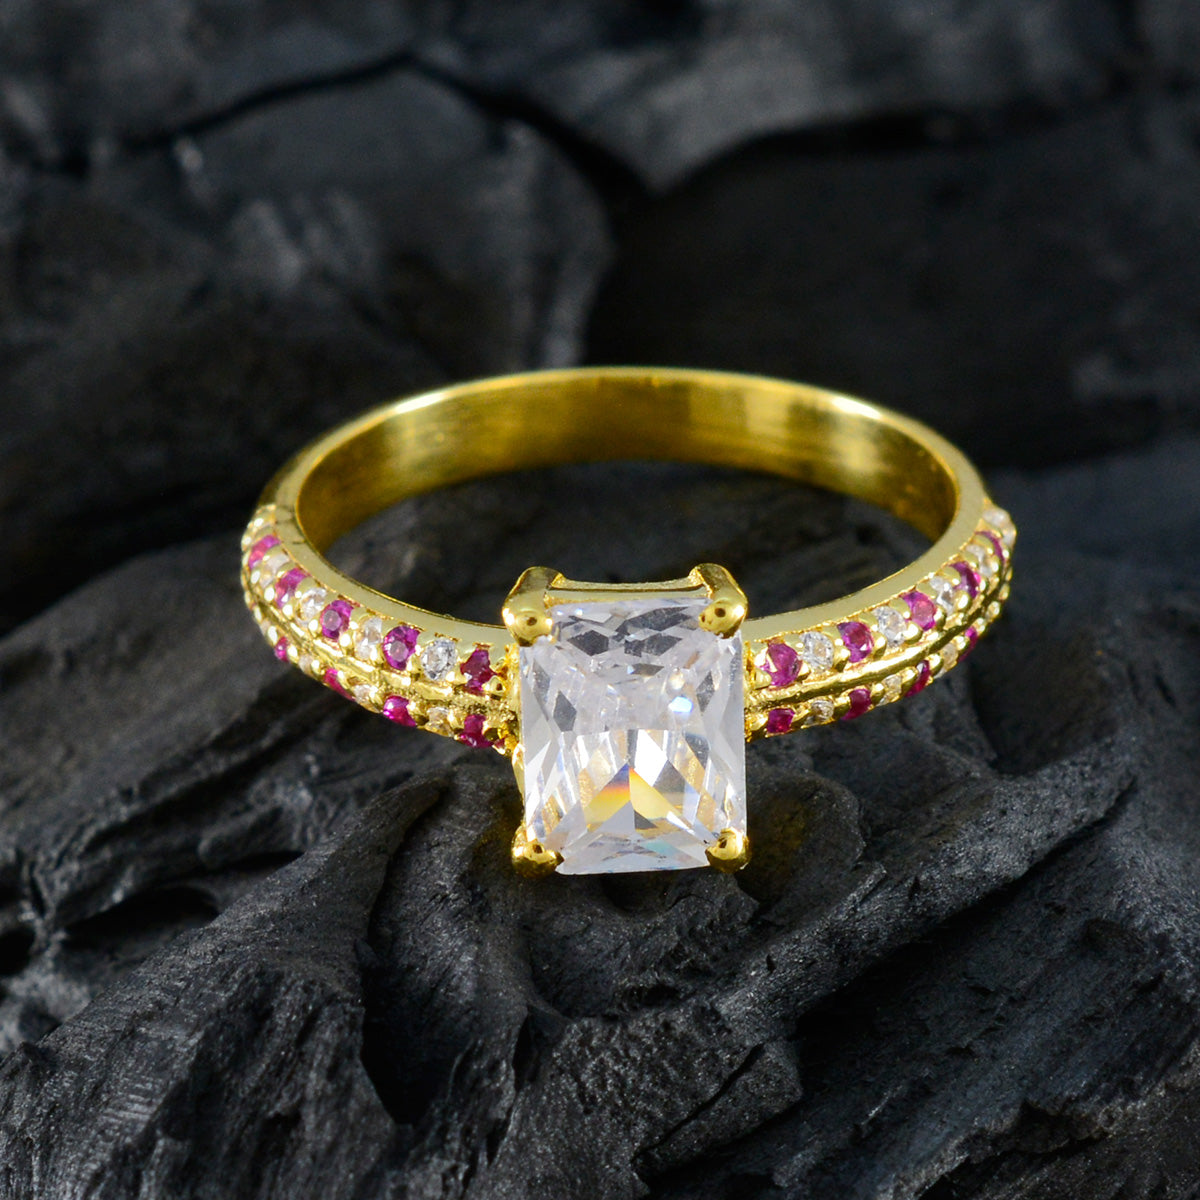 Riyo Bulk Silver Ring With Yellow Gold Plating Ruby CZ Stone Octagon Shape Prong Setting  Jewelry Birthday Ring